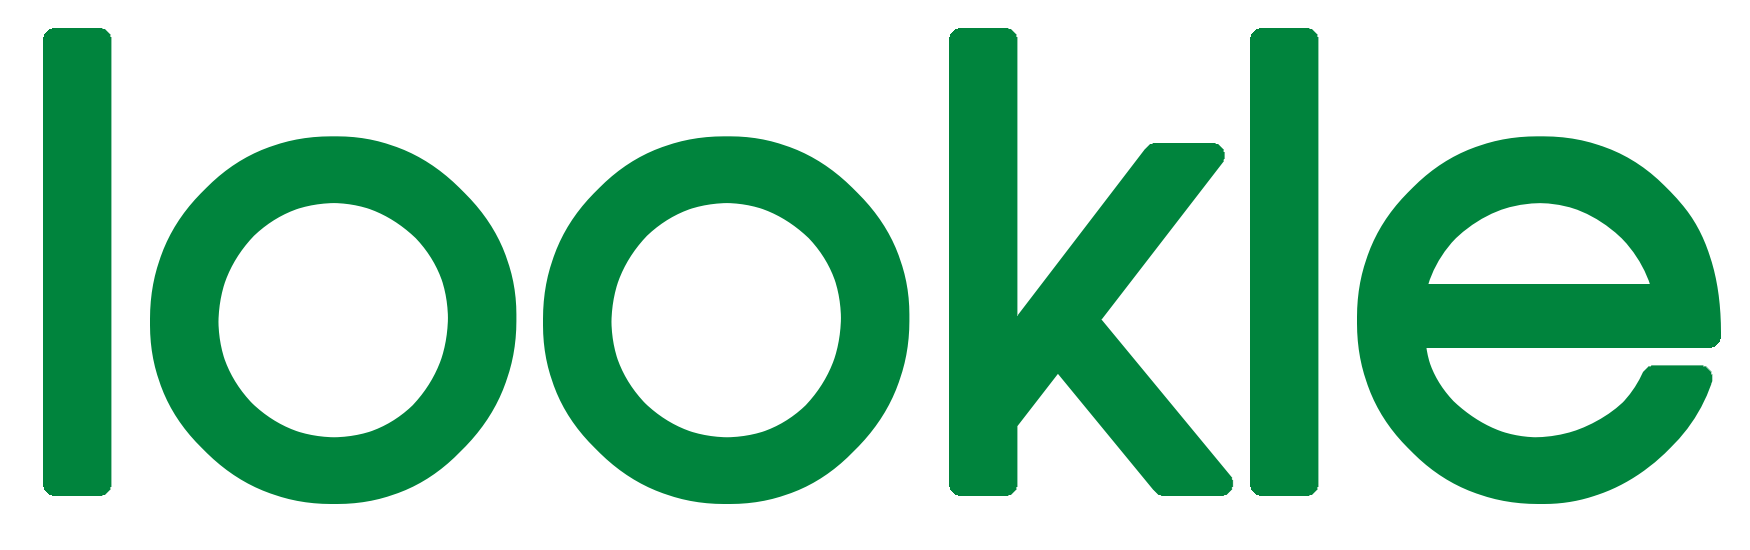 LOOKLE.COM logo